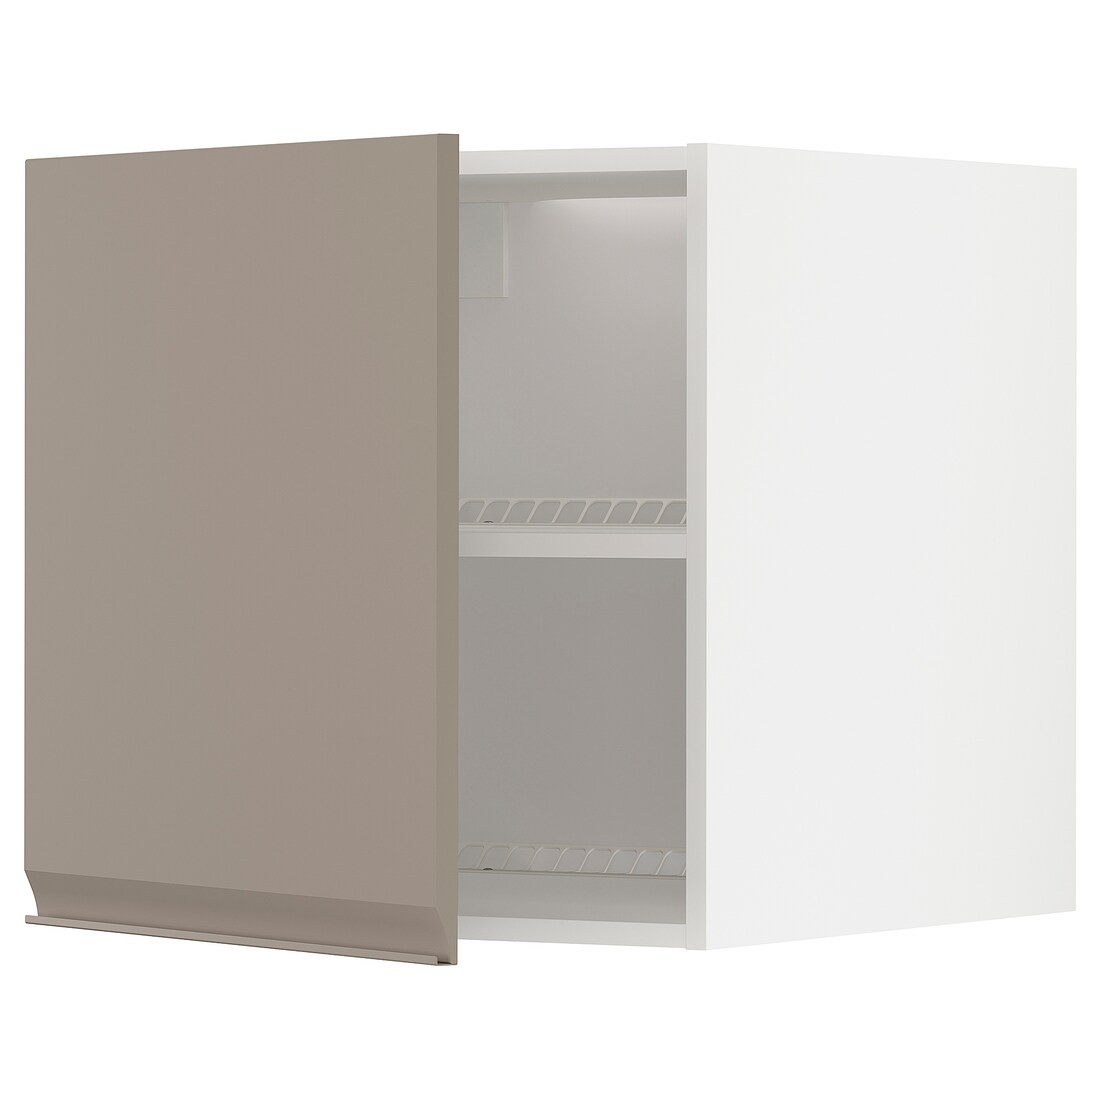 METOD МЕТОД Верхний шкаф для холодильника / морозильника, белый / Upplöv матовый темно-бежевый, 60x60 см